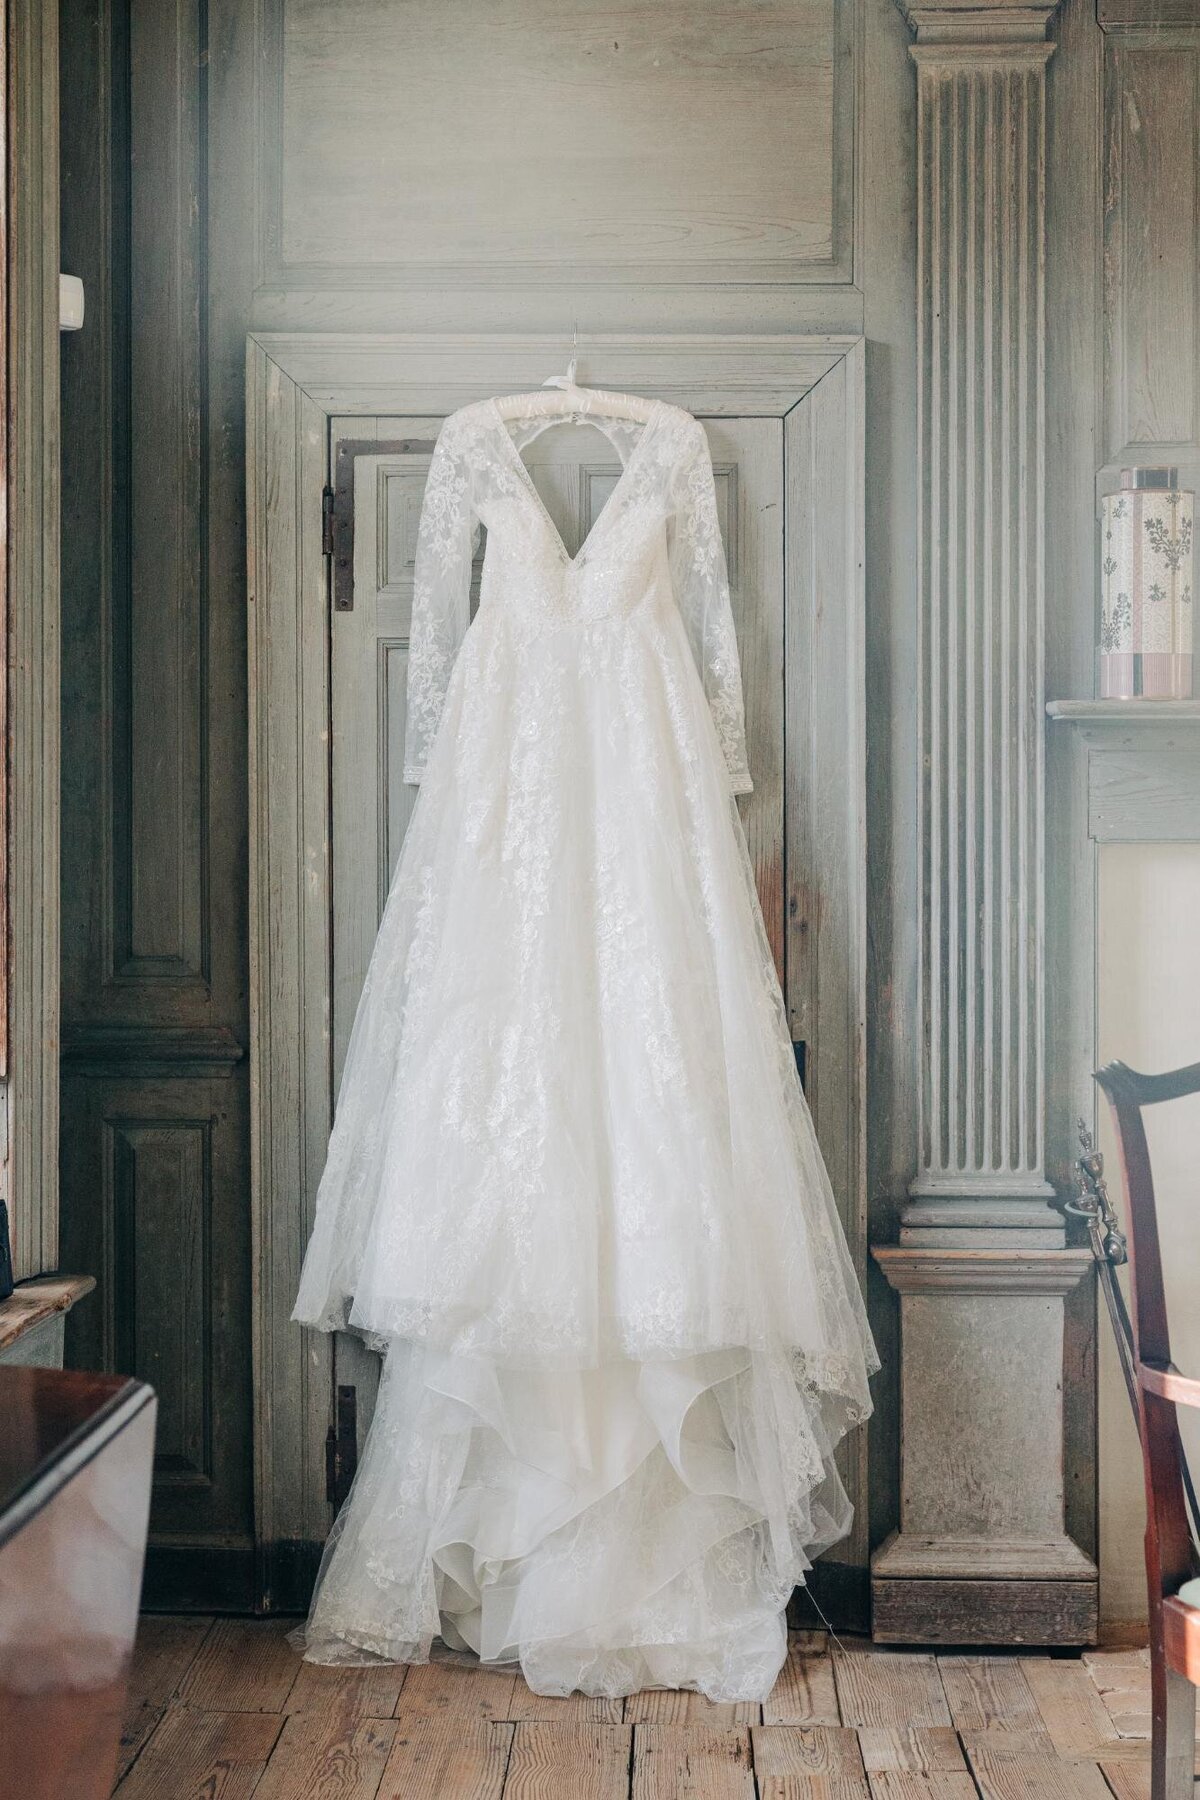 An elegant wedding dress hanging on a vintage wooden door in a rustic room.